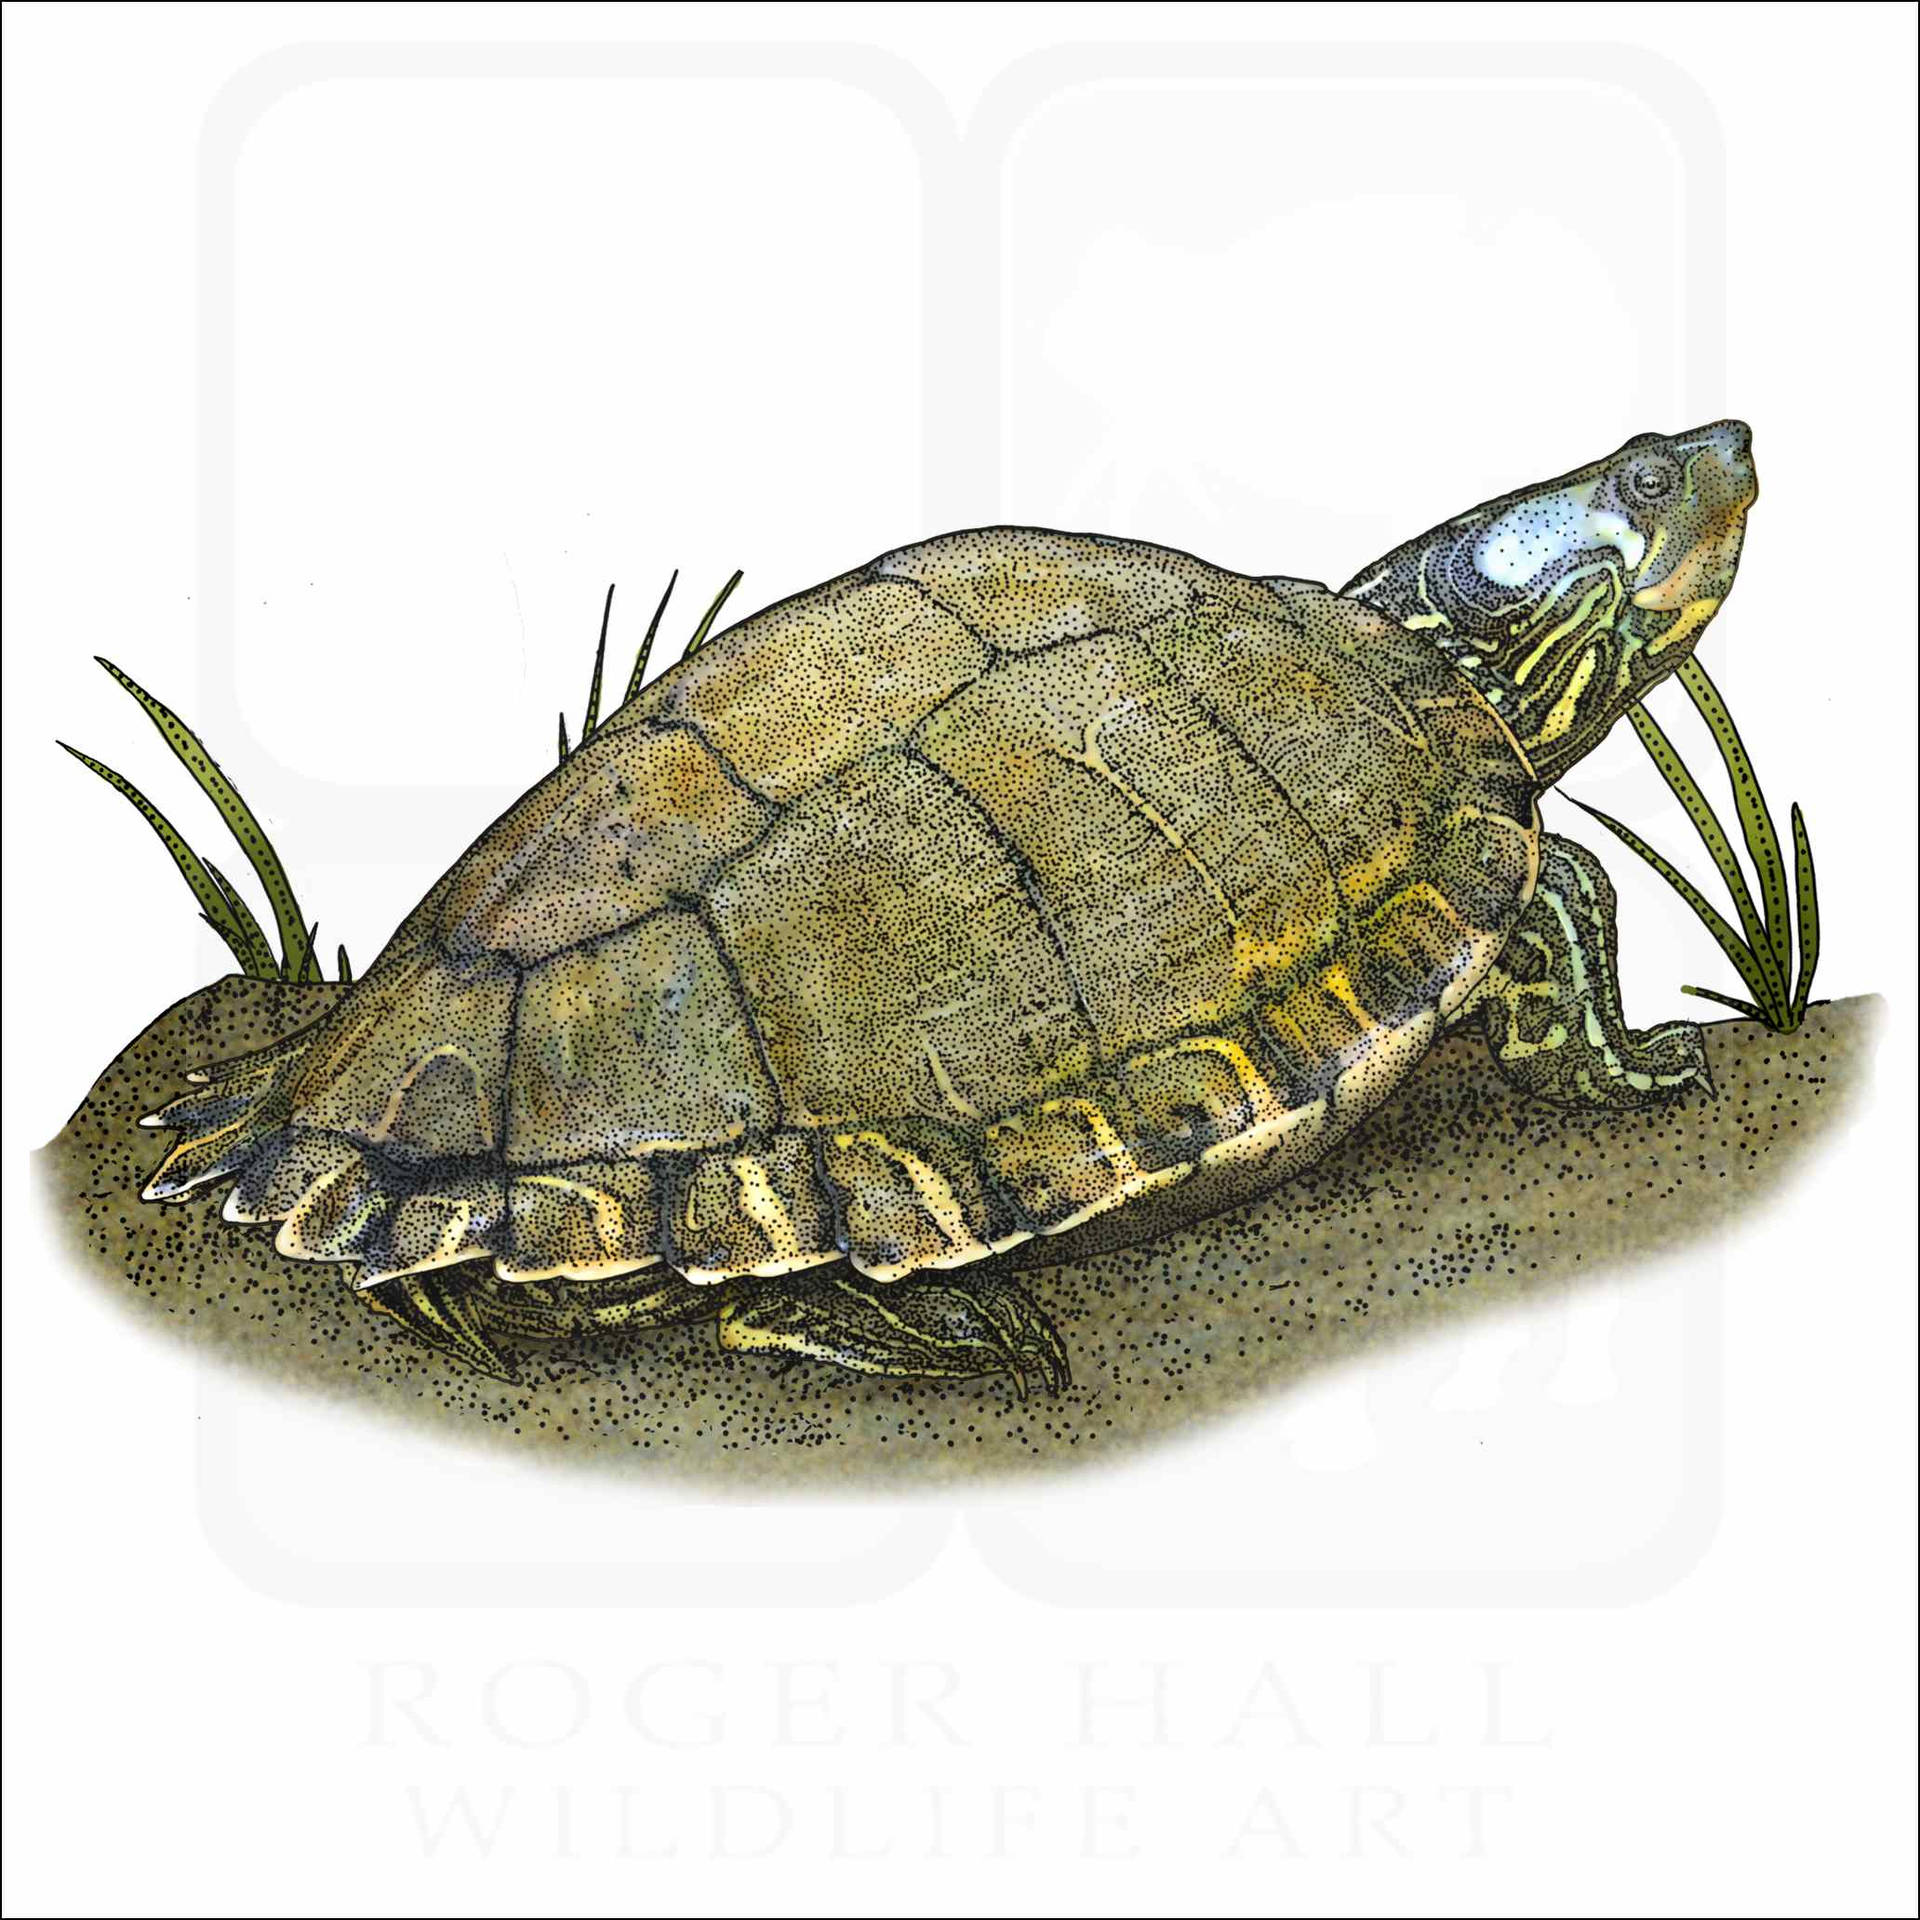 Escambiakarten-schildkröten-illustration. Wallpaper